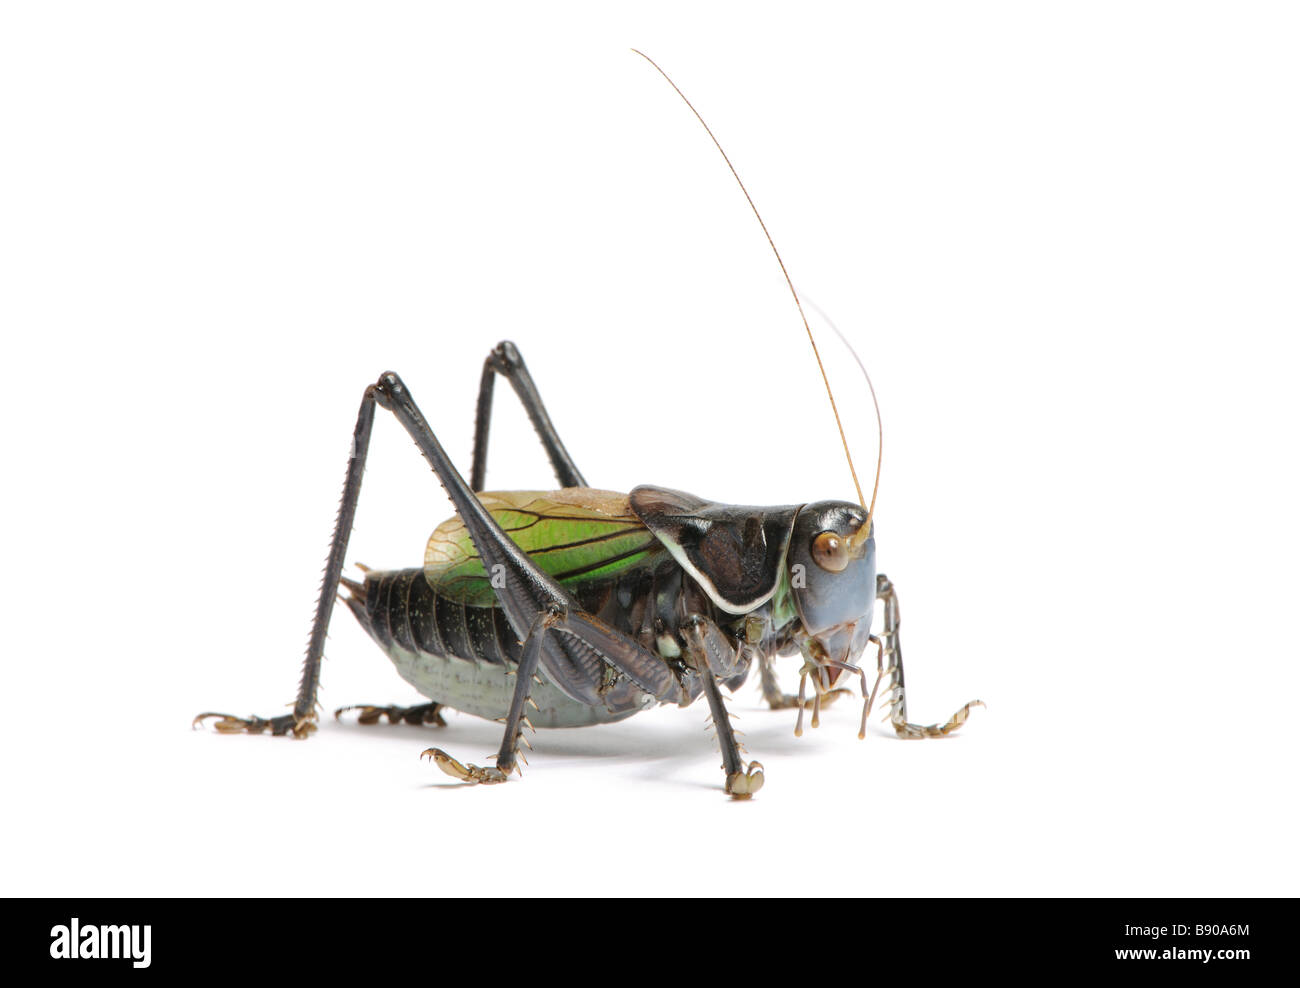 Grasshopper Gampsocleis gratiosa delante de un fondo blanco. Foto de stock